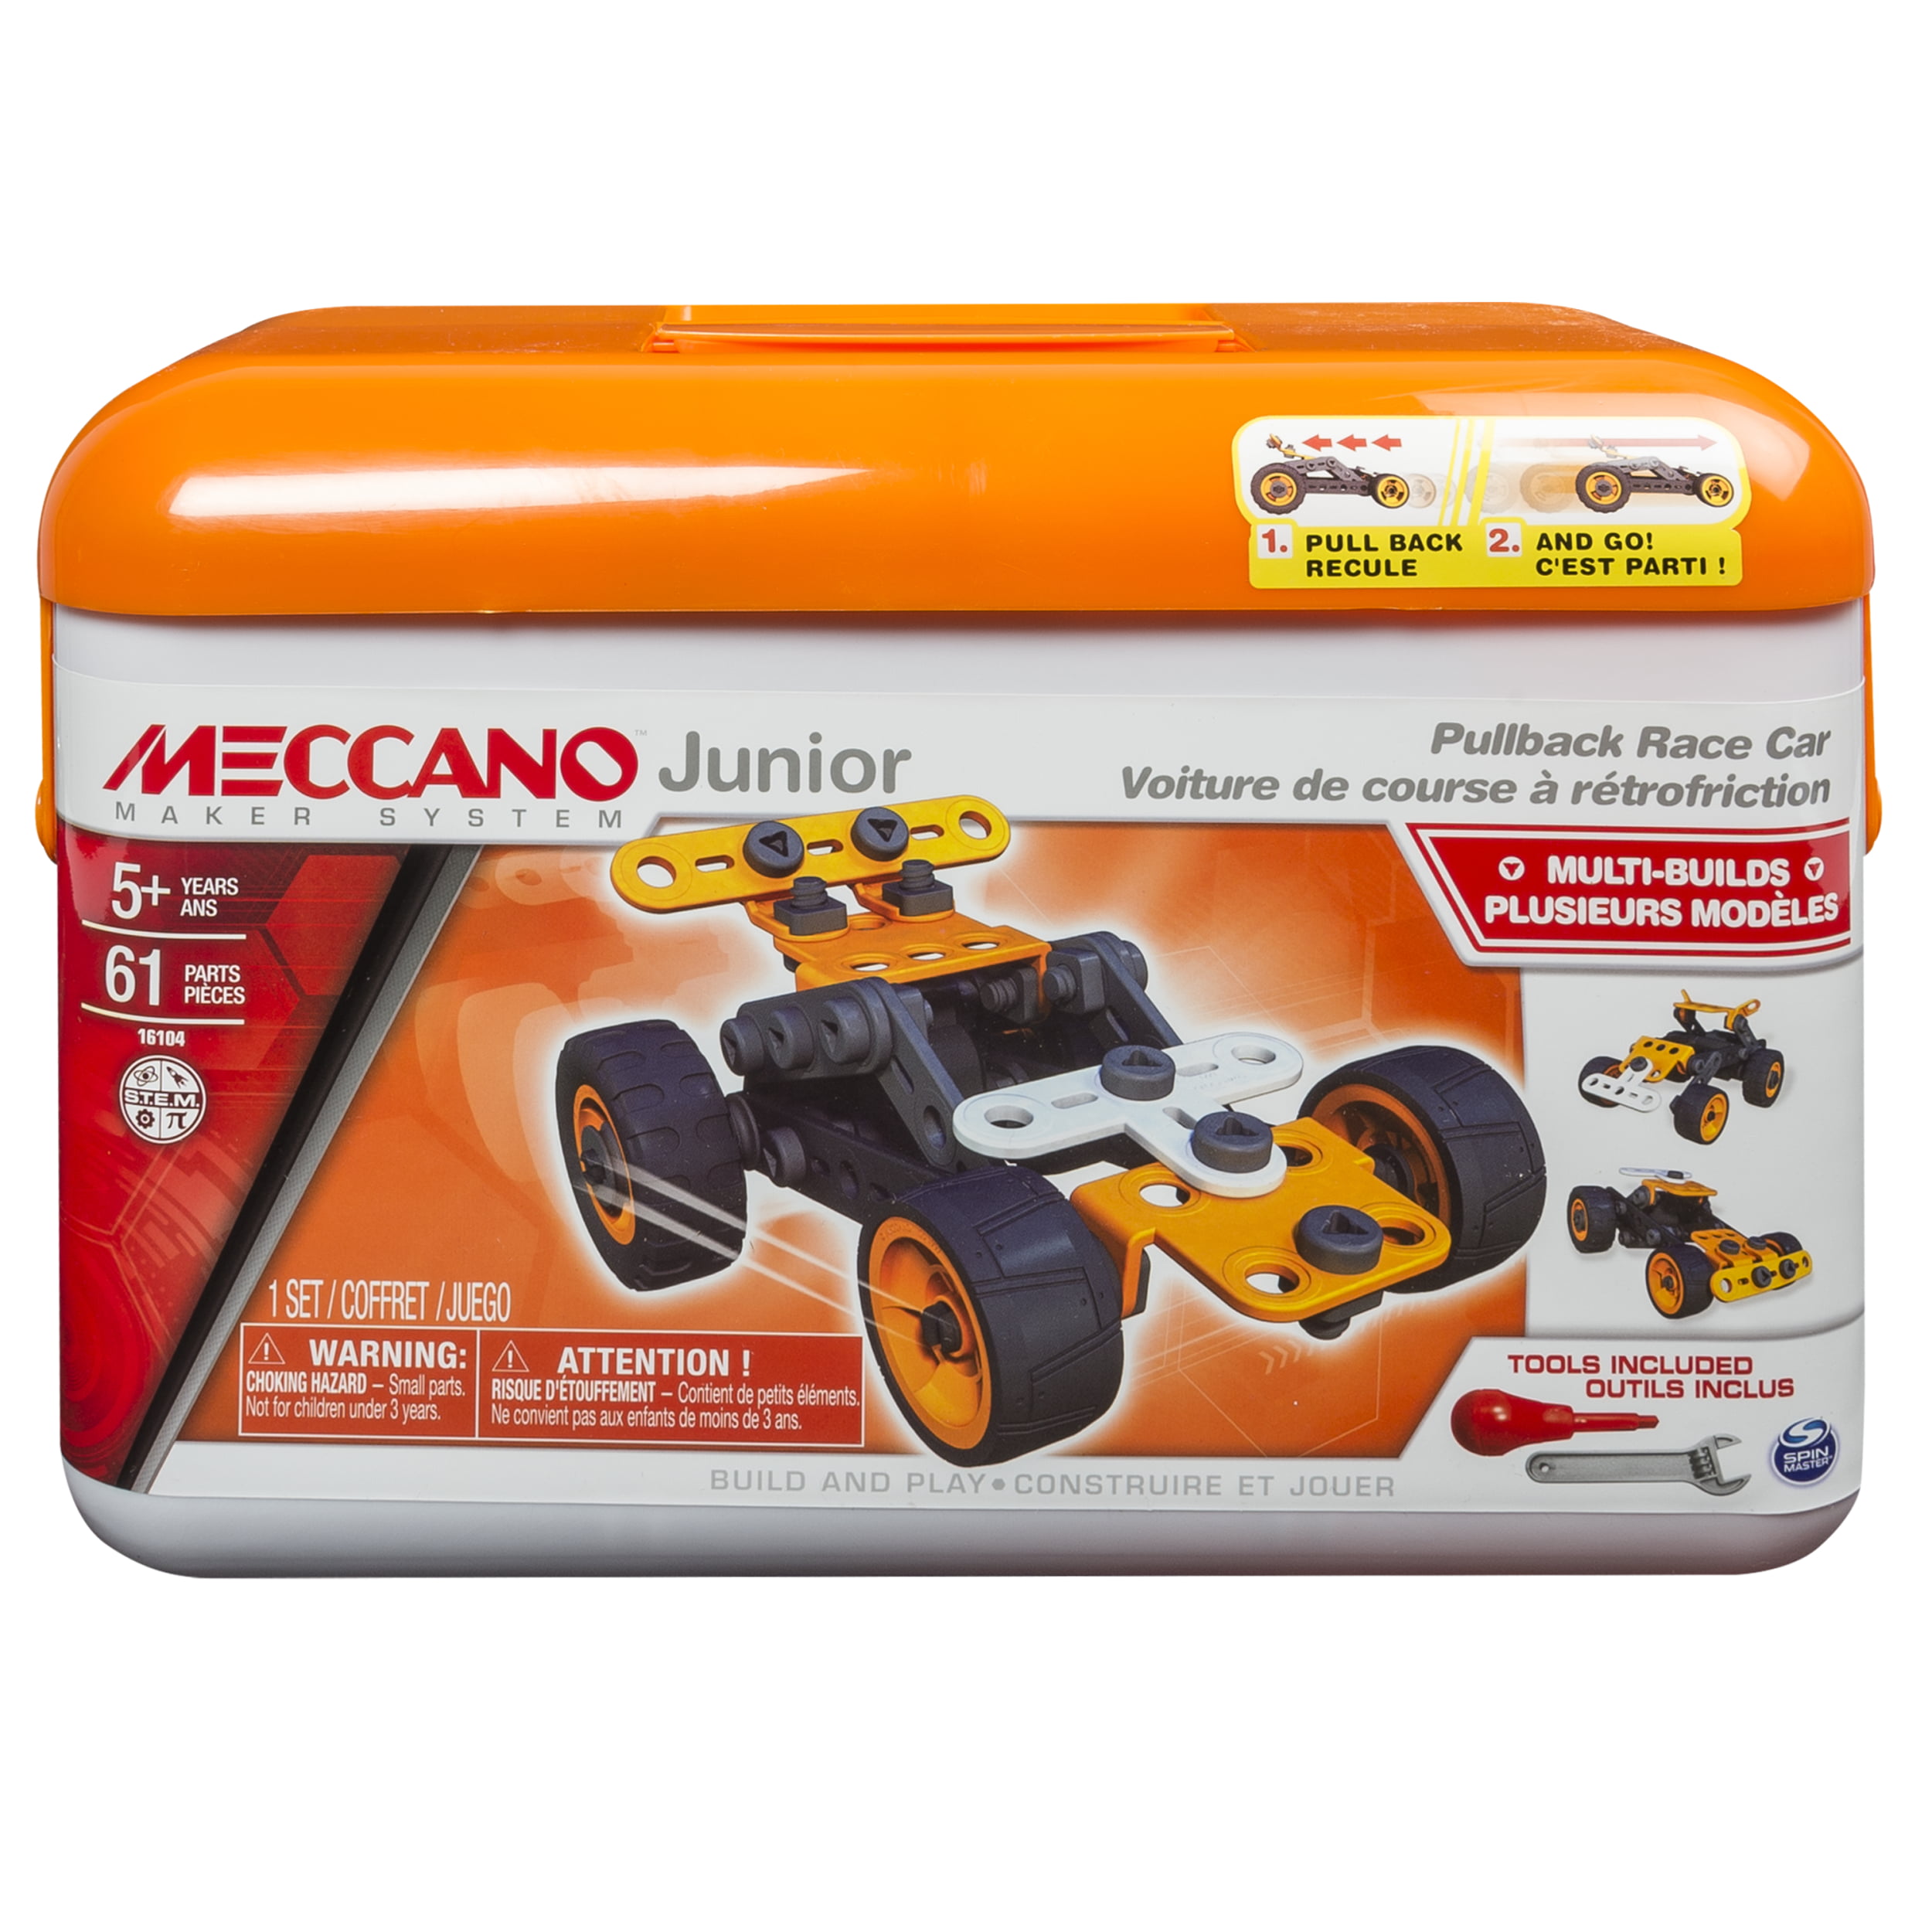 Meccano Junior Toolbox Pullback Race Car 5 Model Set